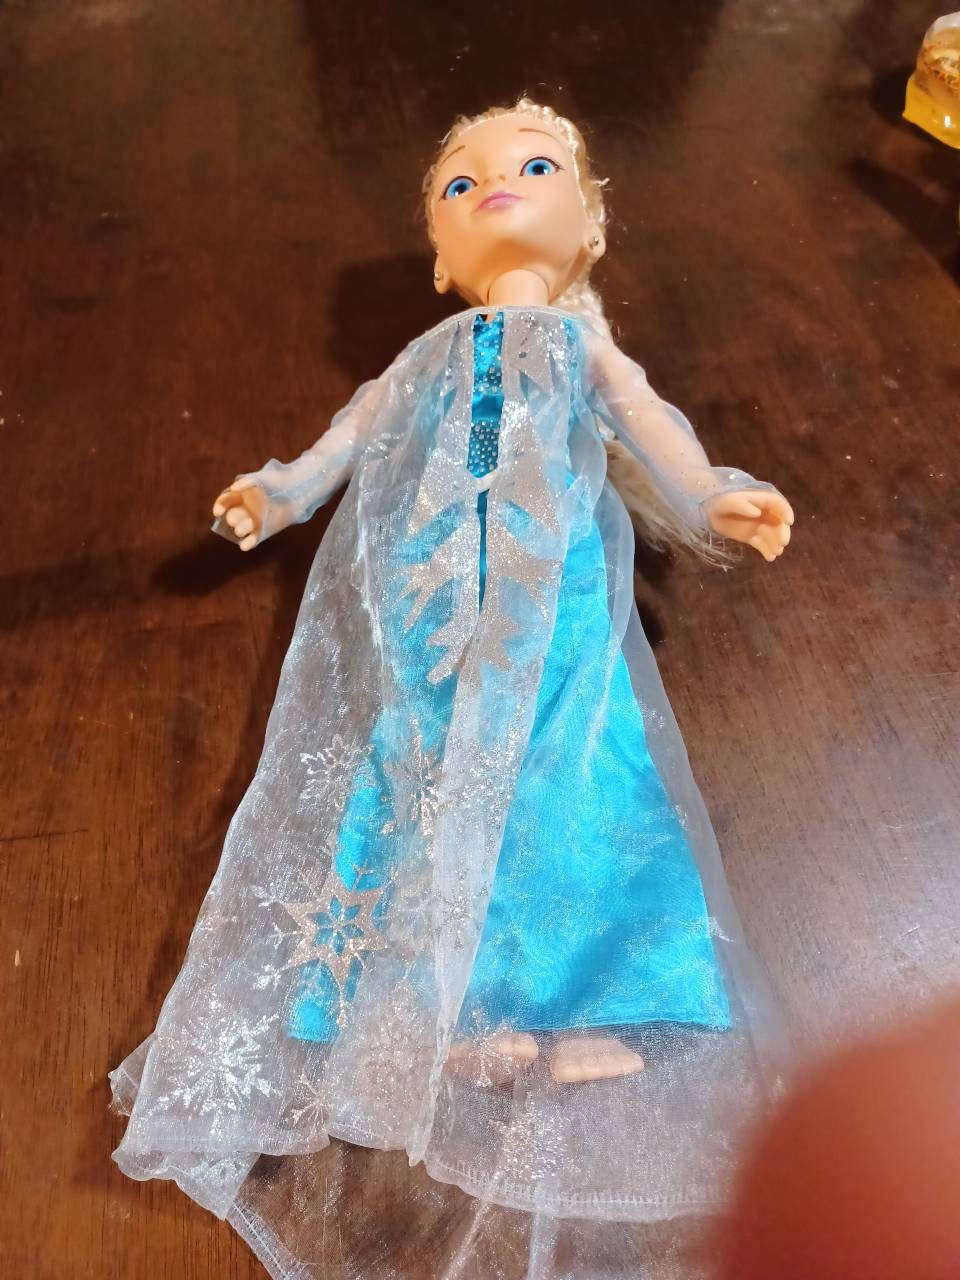 Disney Frozen Elsa Dolls for sale in Campo Grande, Brazil